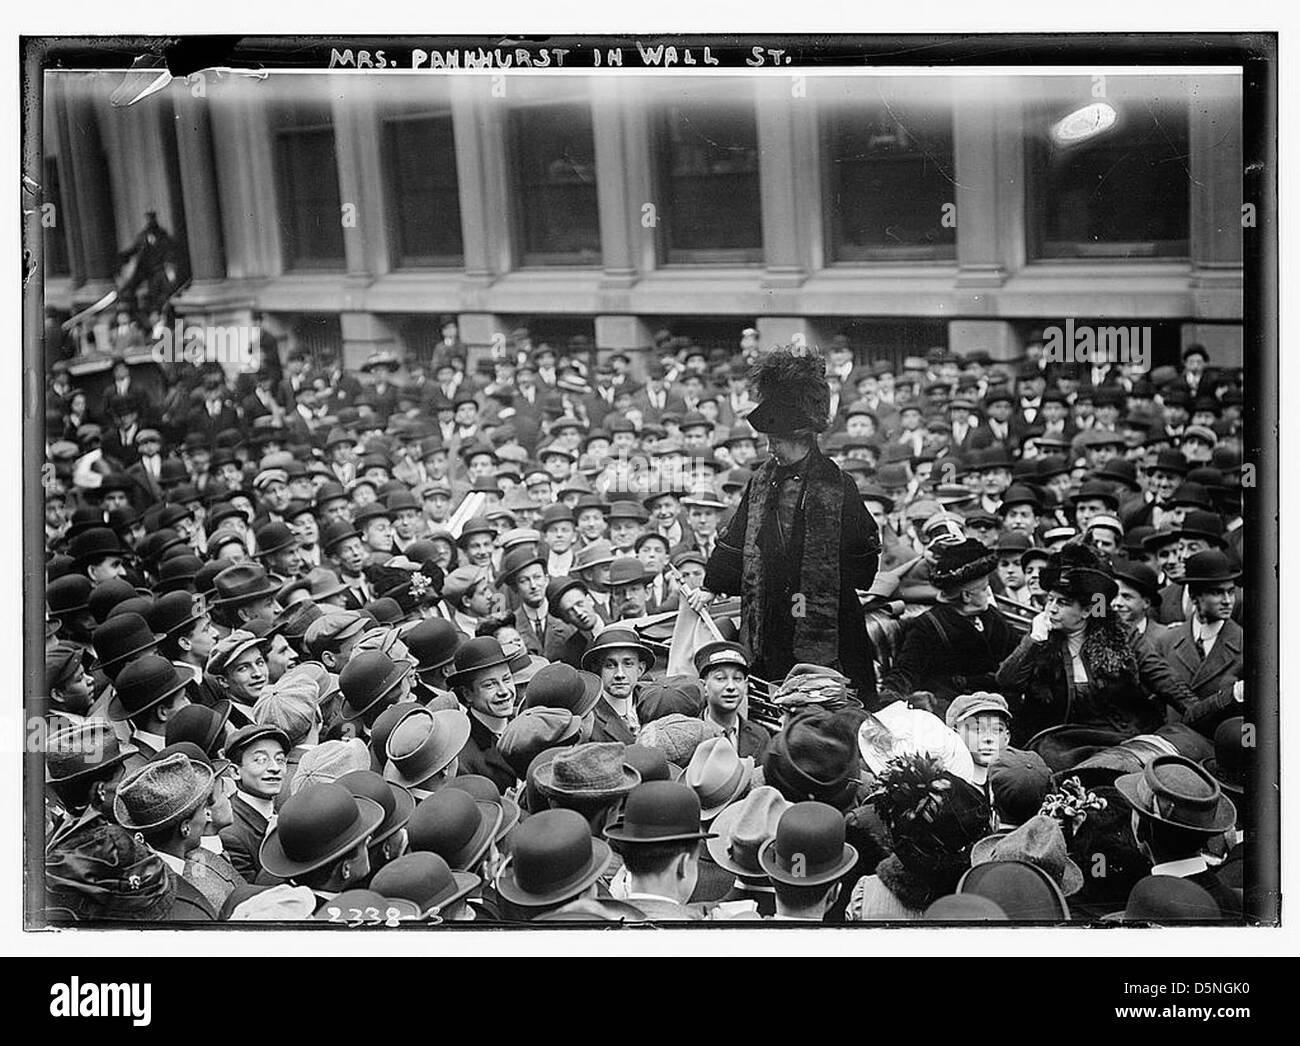 Mrs. Pankhurst in Wall St. (LOC) Stock Photo